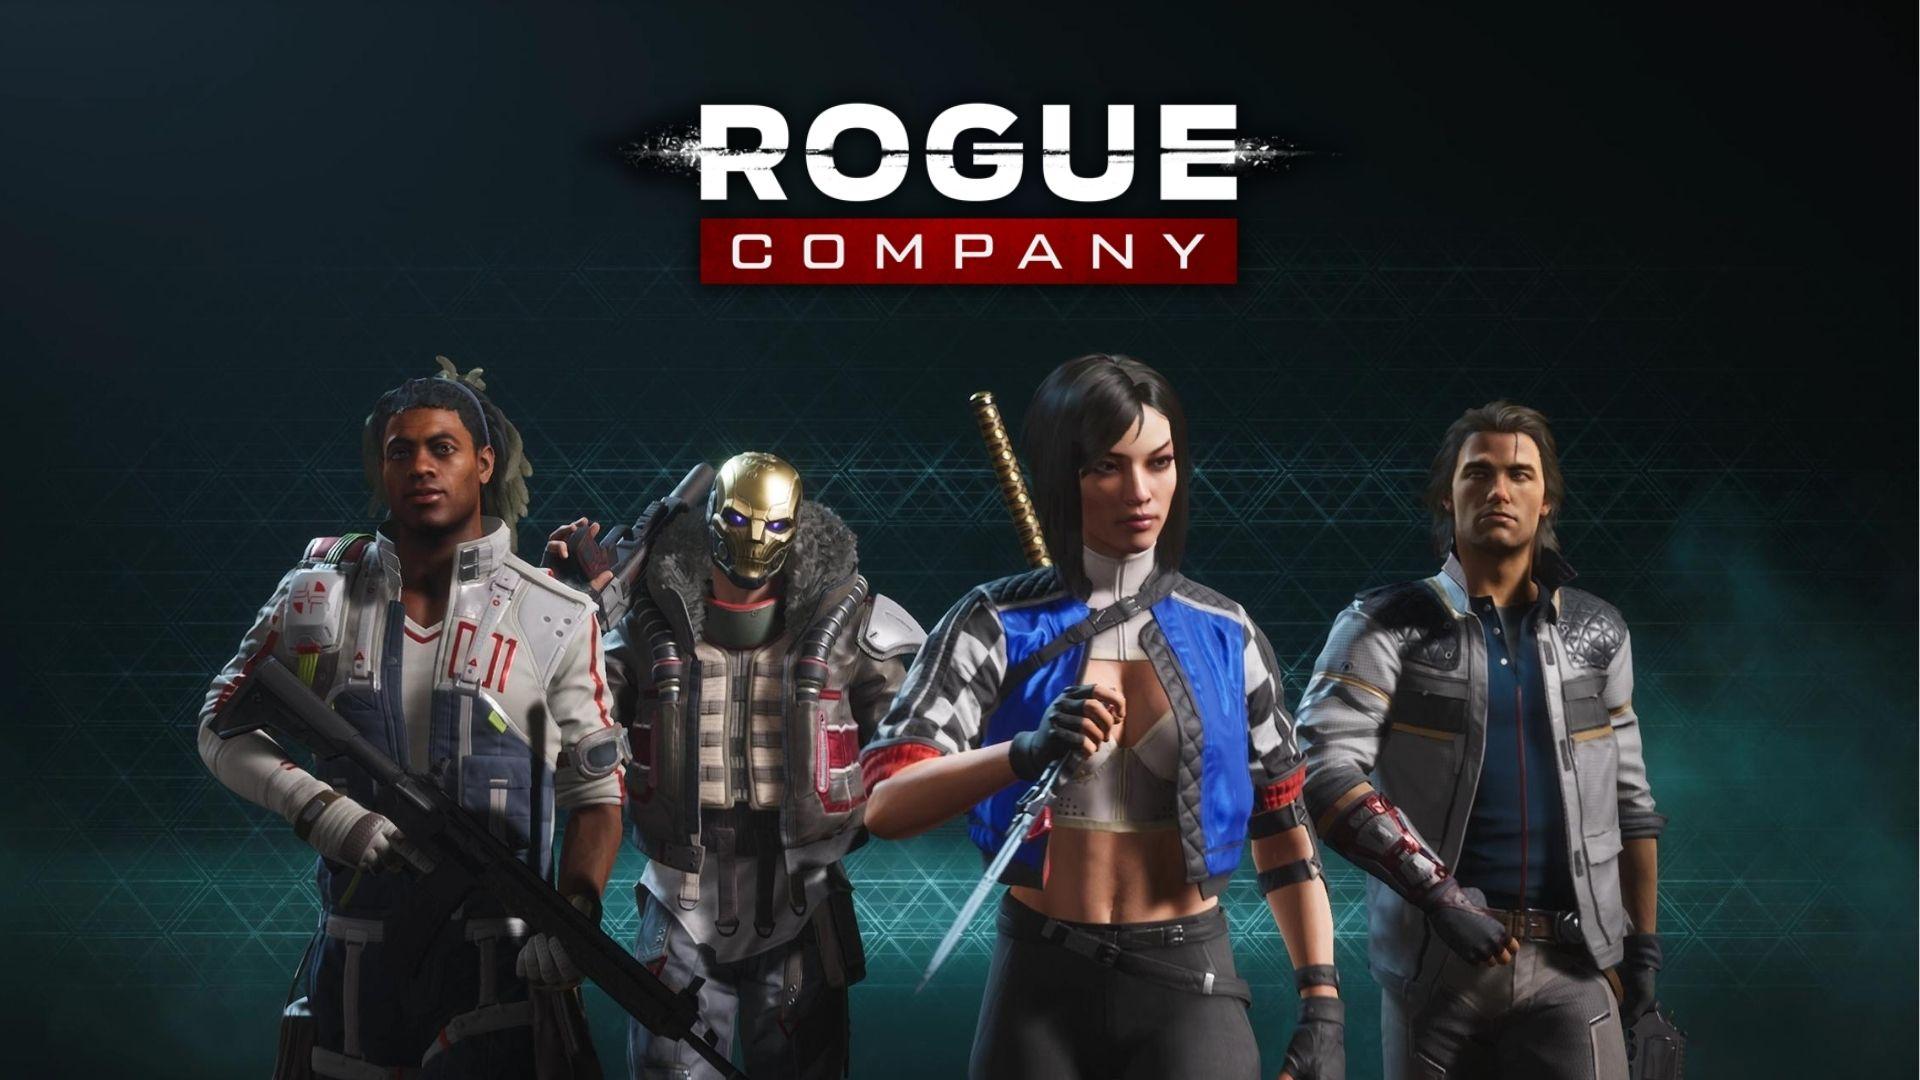 Rogue Company: Rogue Edition